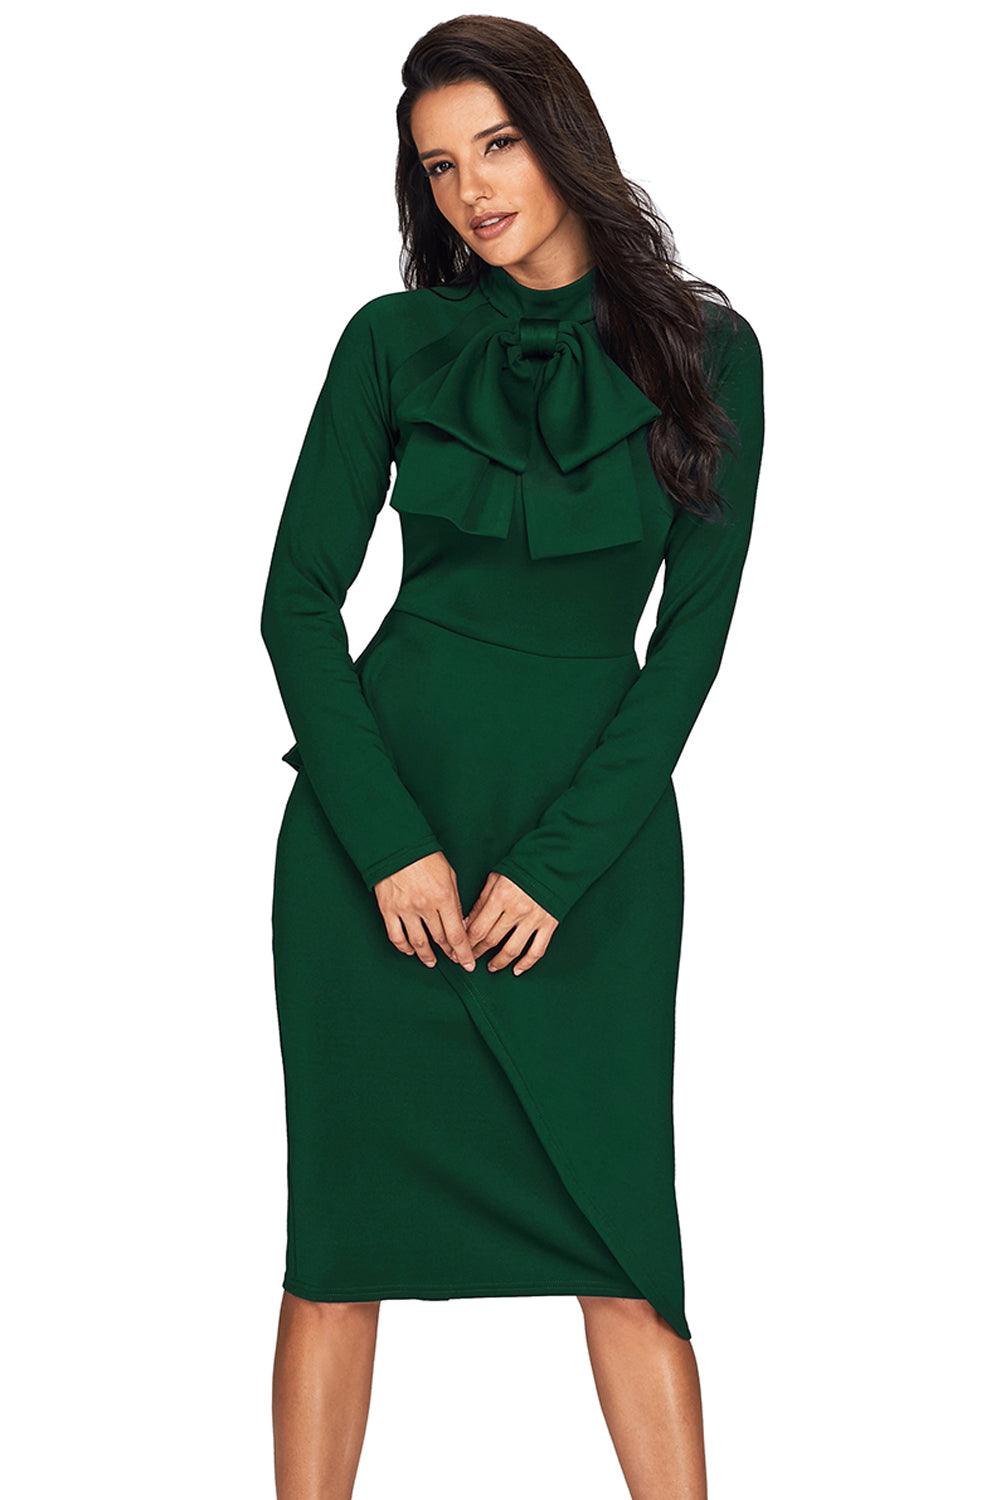 Jade Green Asymmetric Peplum Style Pussy Bow Dress Midi Dresses JT's Designer Fashion